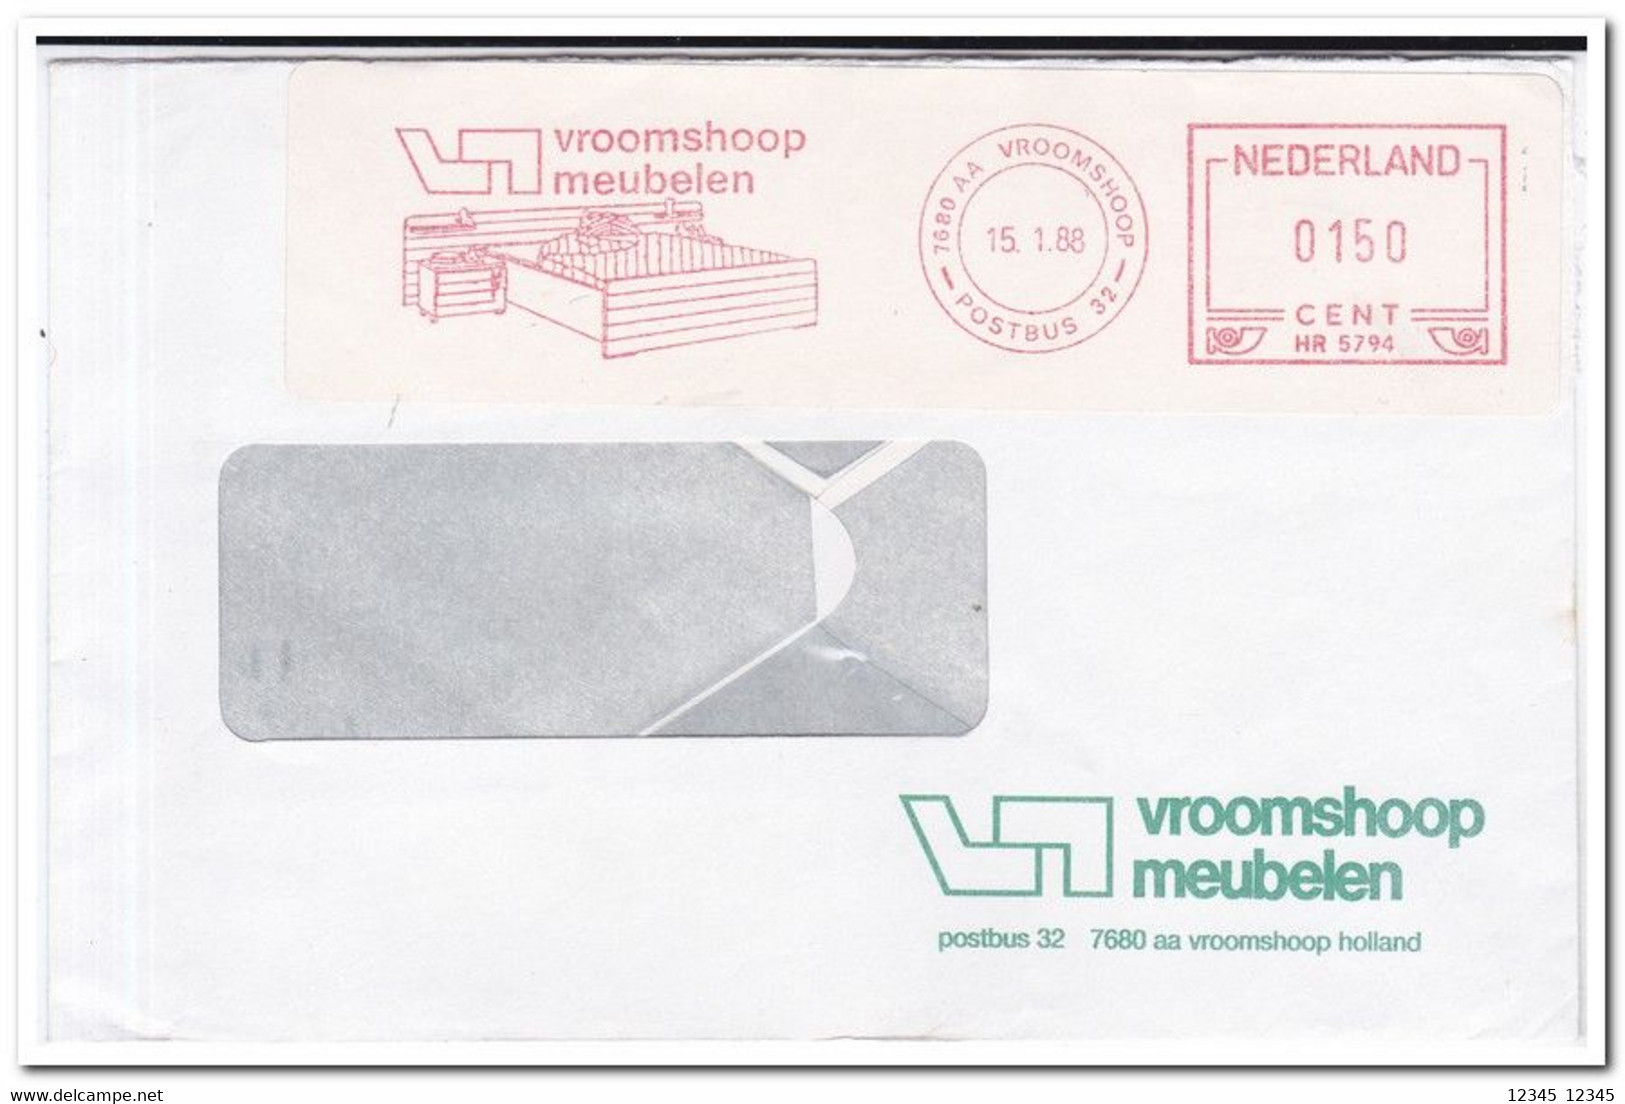 Nederland 1988, Vroomshoop Meubelen, Vroomshoop Furniture - Maschinenstempel (EMA)